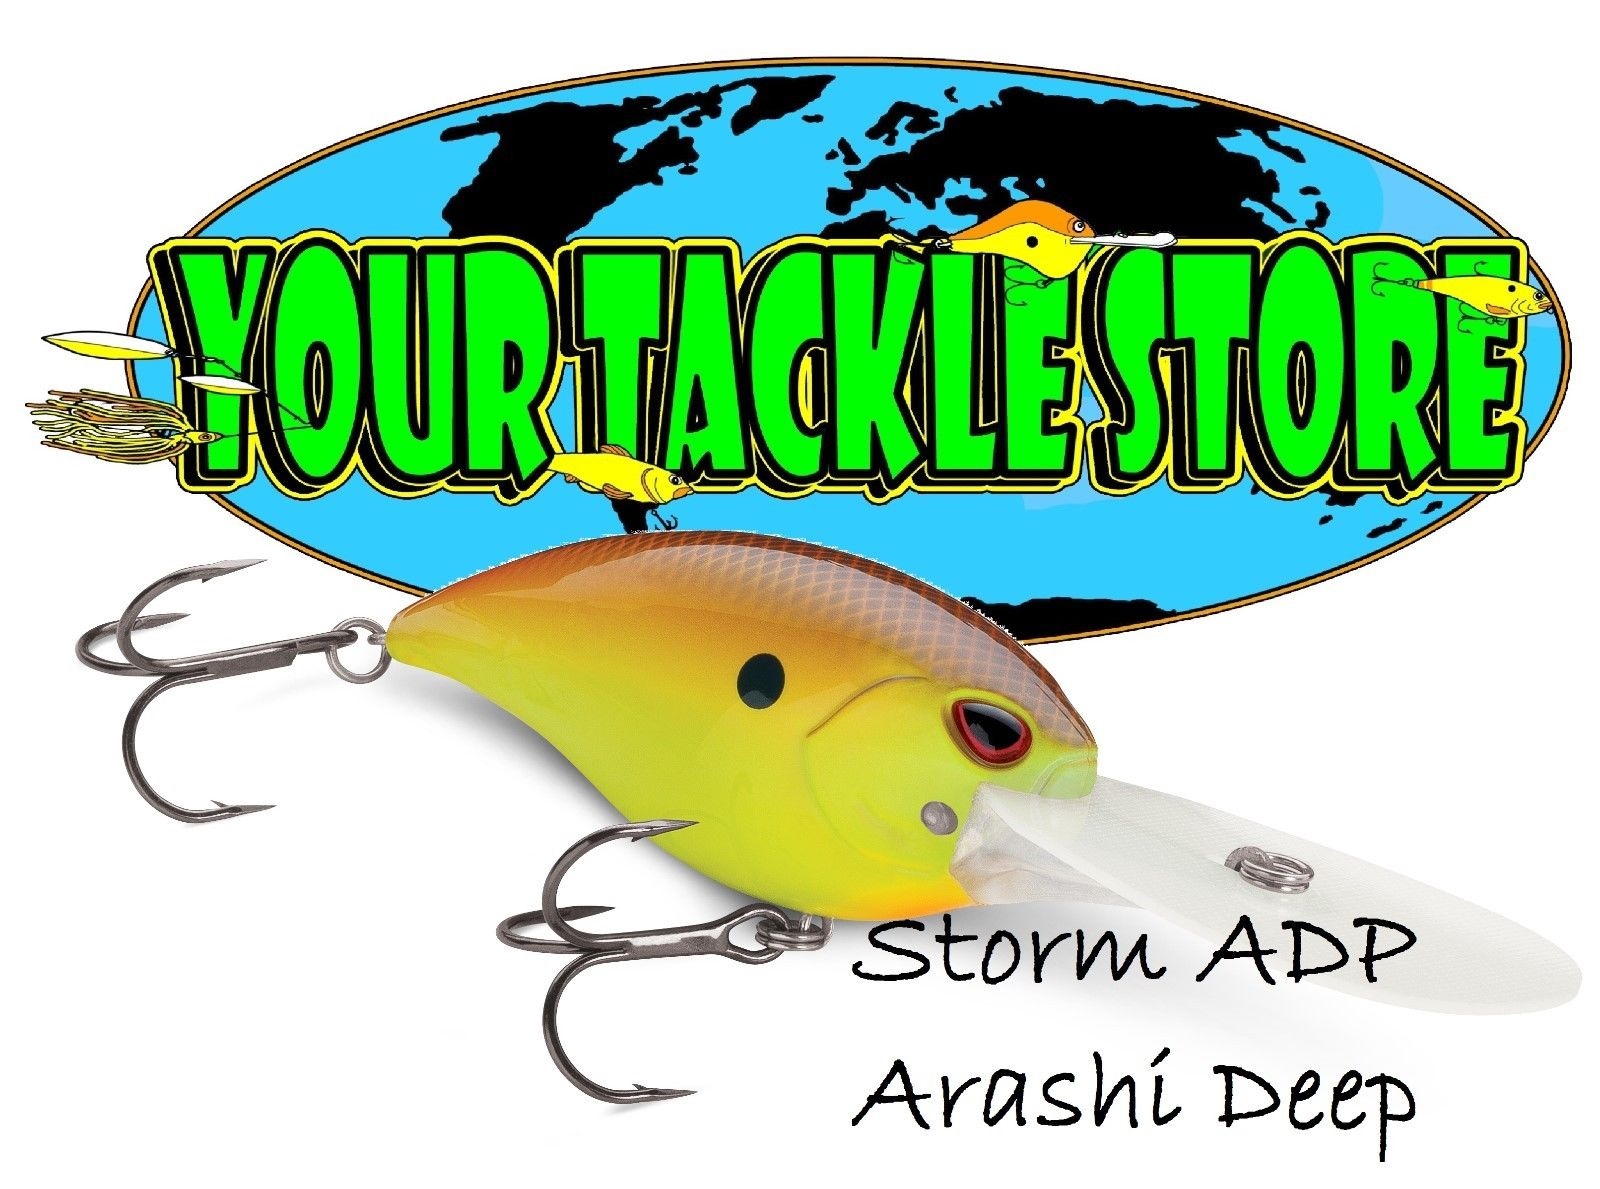 Storm Arashi Rattling Deep 25 Fishing Lure Crankbait Green Gold Shad New !!